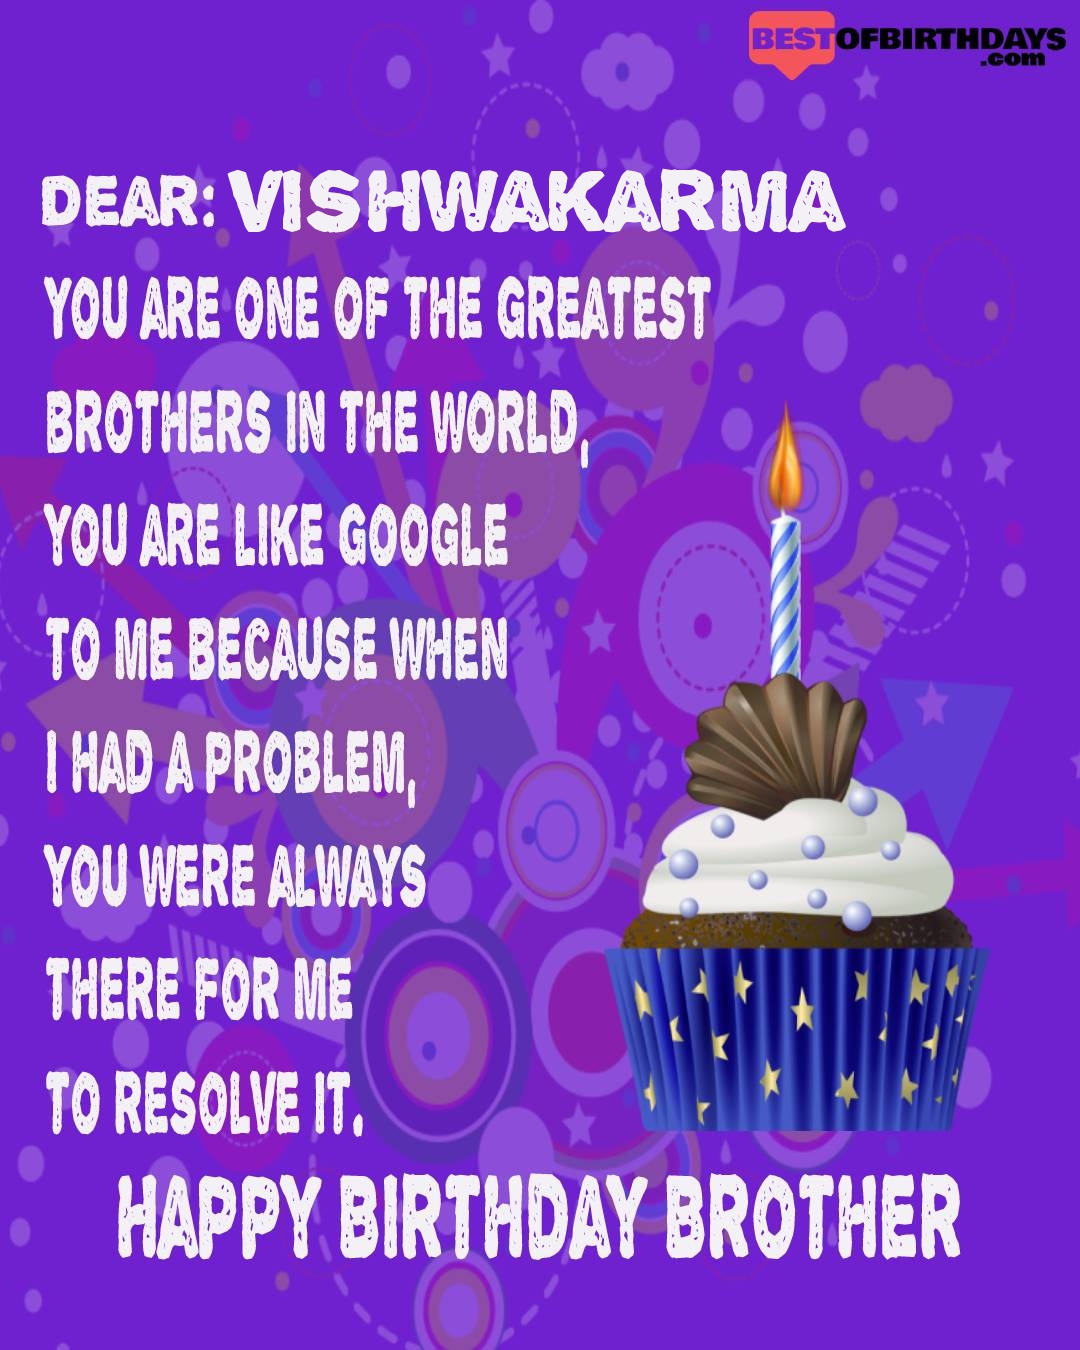 Happy birthday vishwakarma bhai brother bro